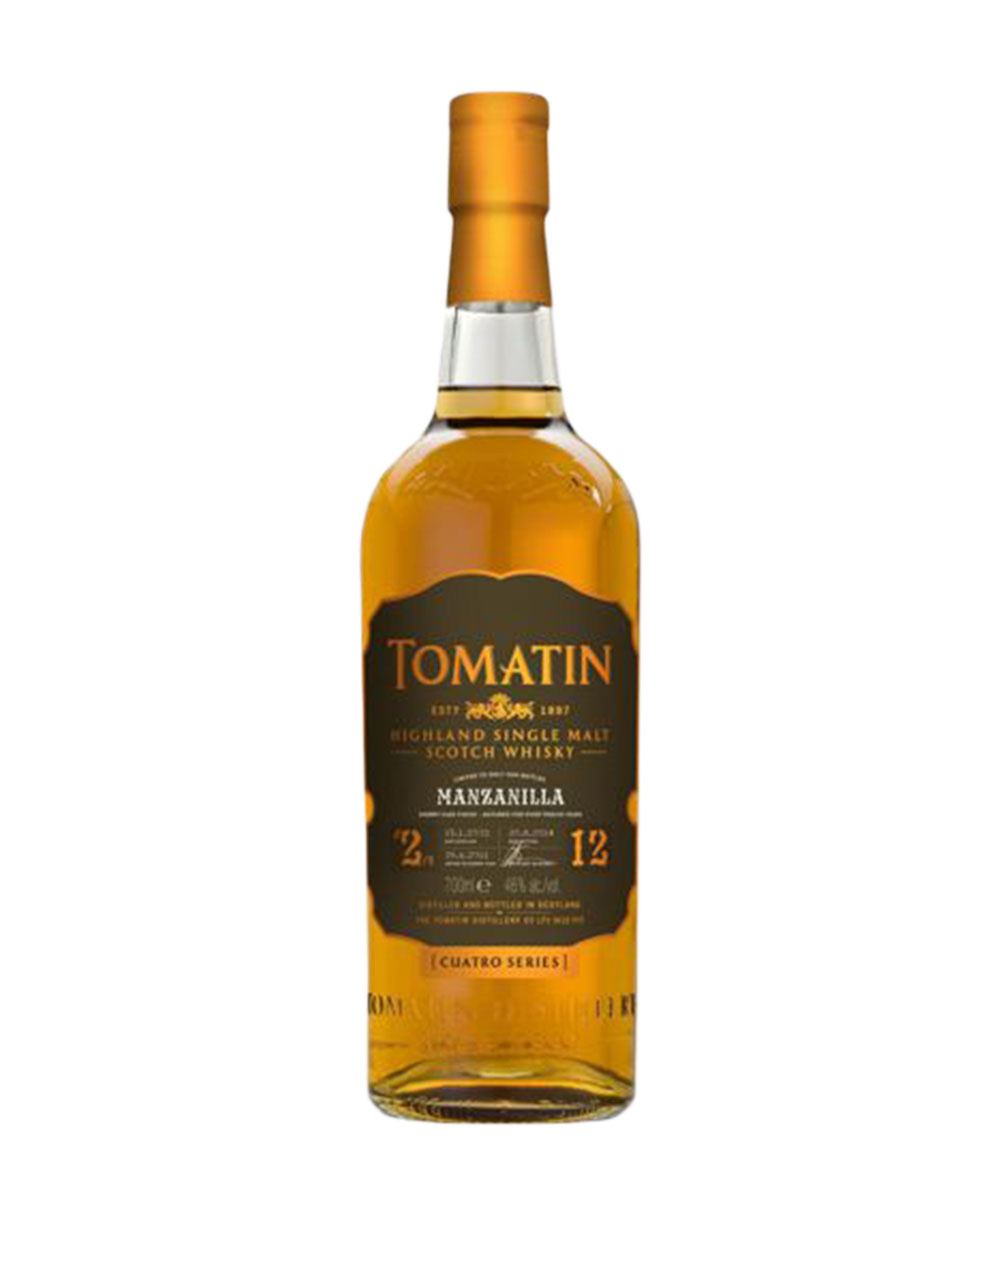 Tomatin 12 Year Old Cuatro Manzanilla Sherry Cask Finish Single Malt Scotch Whisky